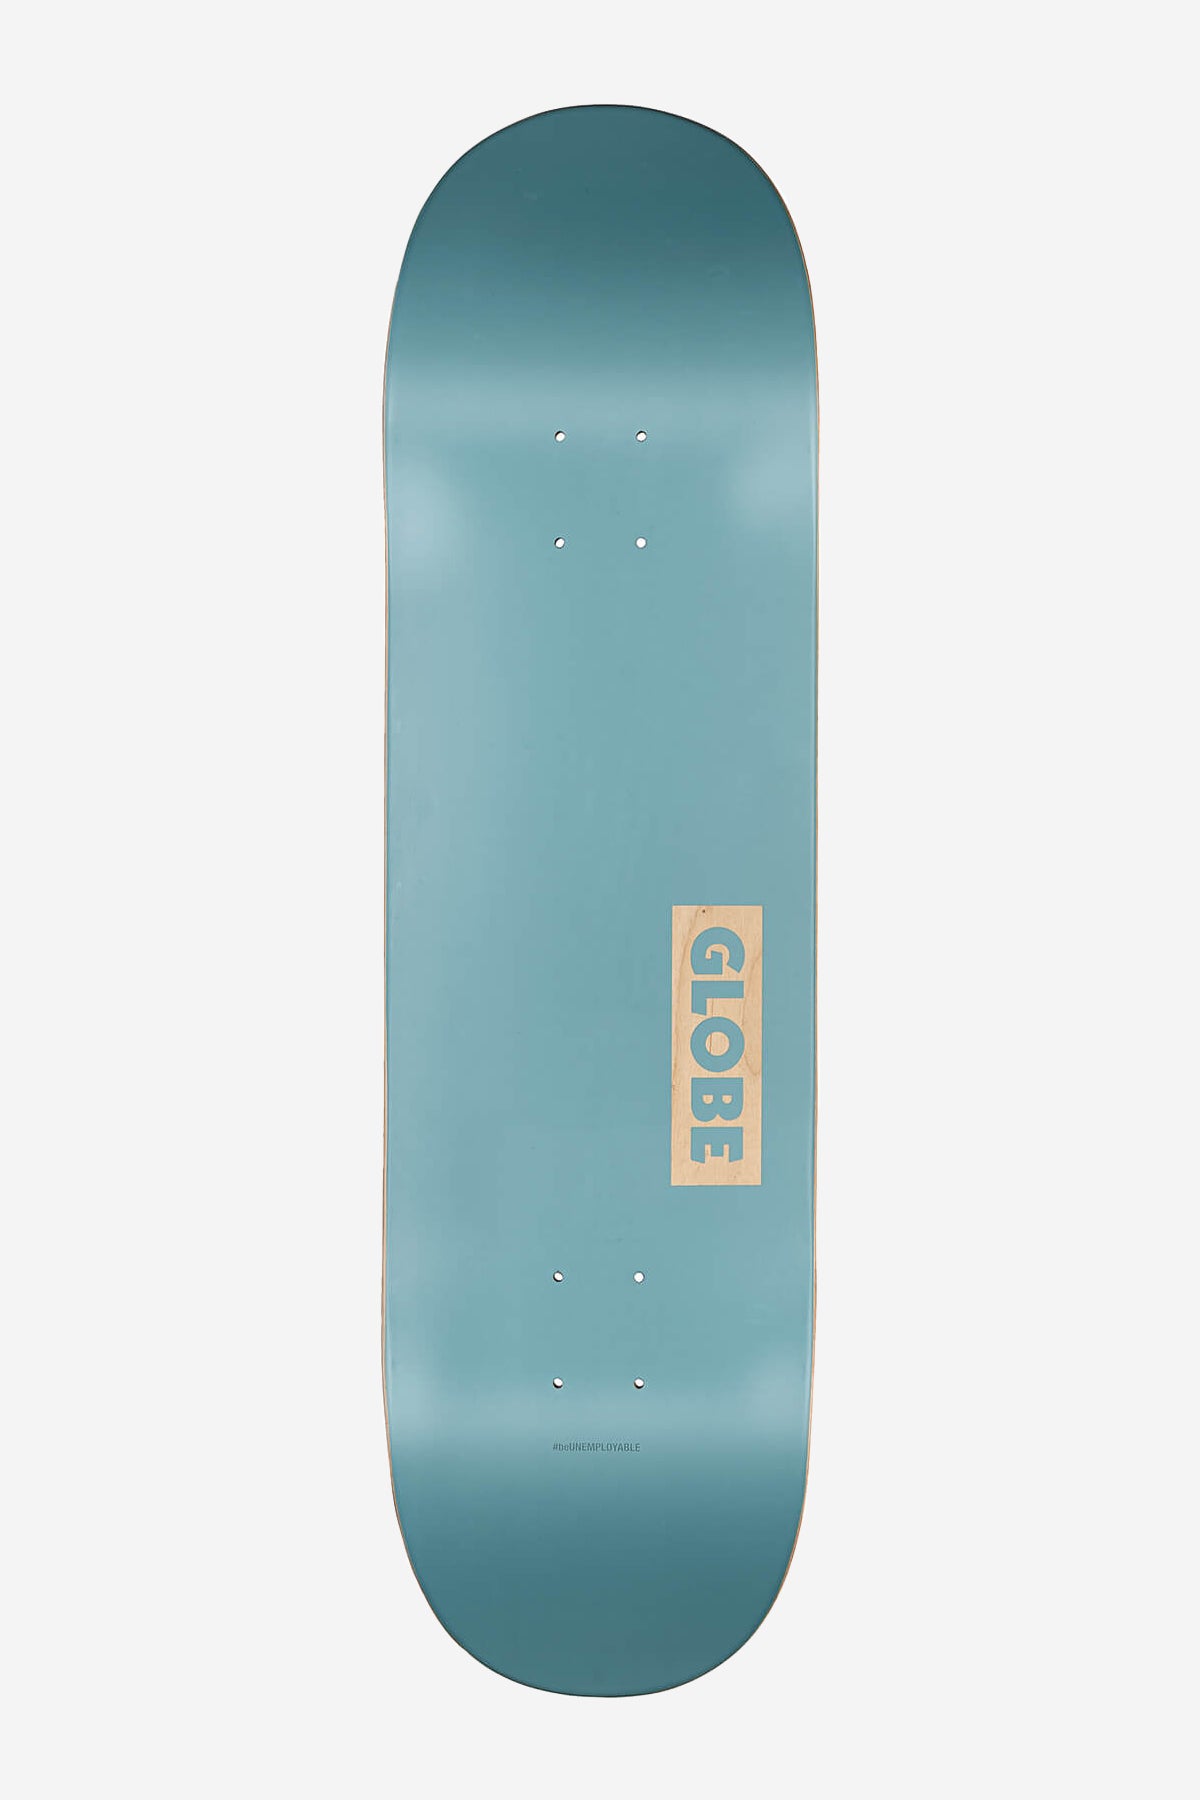 komponist sikring Omsorg Goodstock - Steel Blue - 8.75" Skateboard Deck – Globe Europe